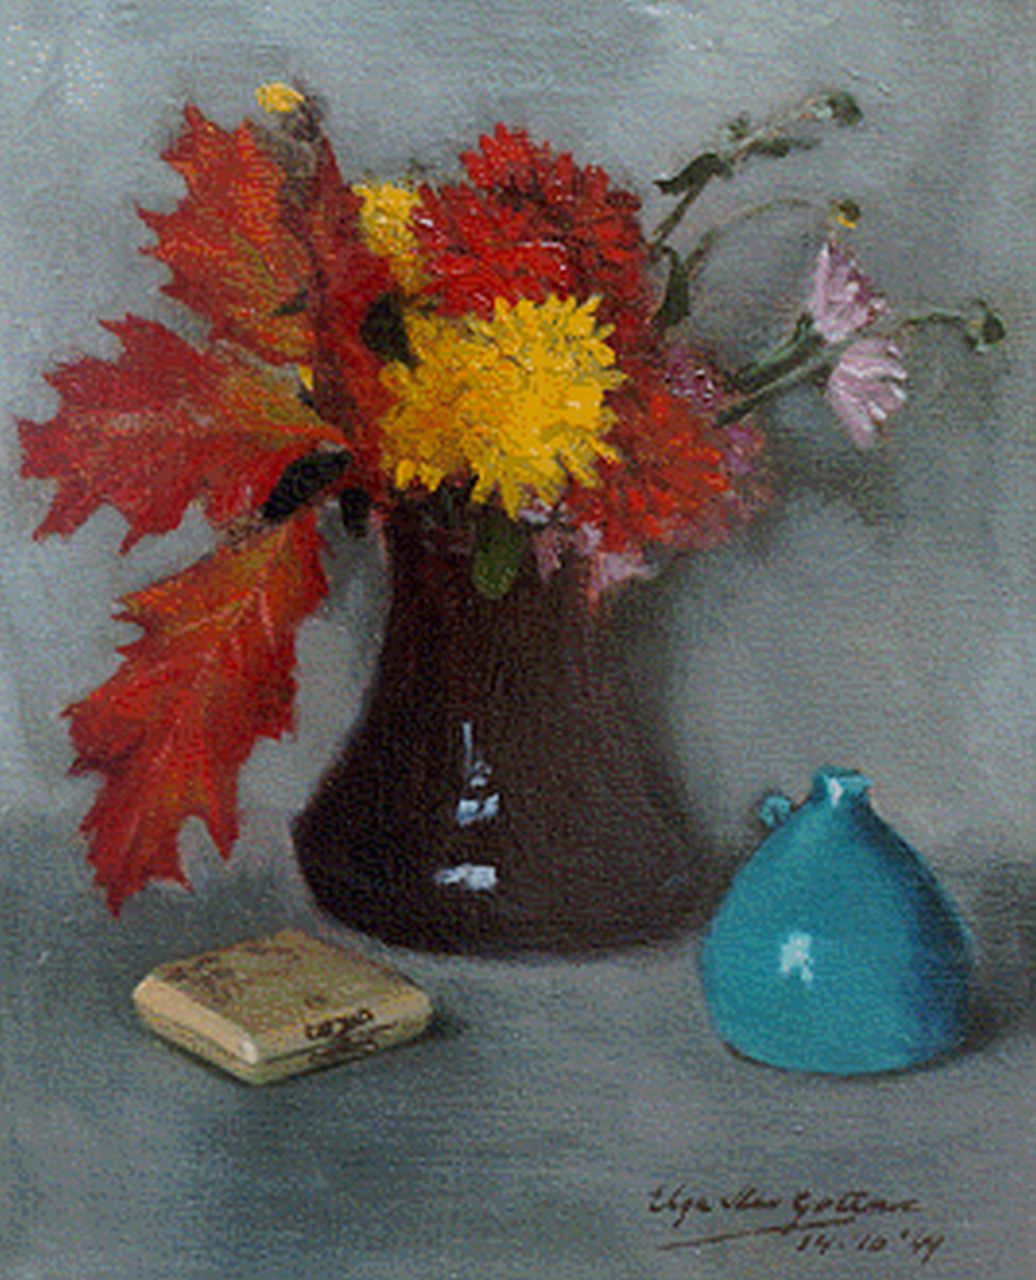 Elga Gottnic | Herfstboeket in een vaas, olieverf op doek, 30,0 x 24,3 cm, gesigneerd r.o. en gedateerd '49